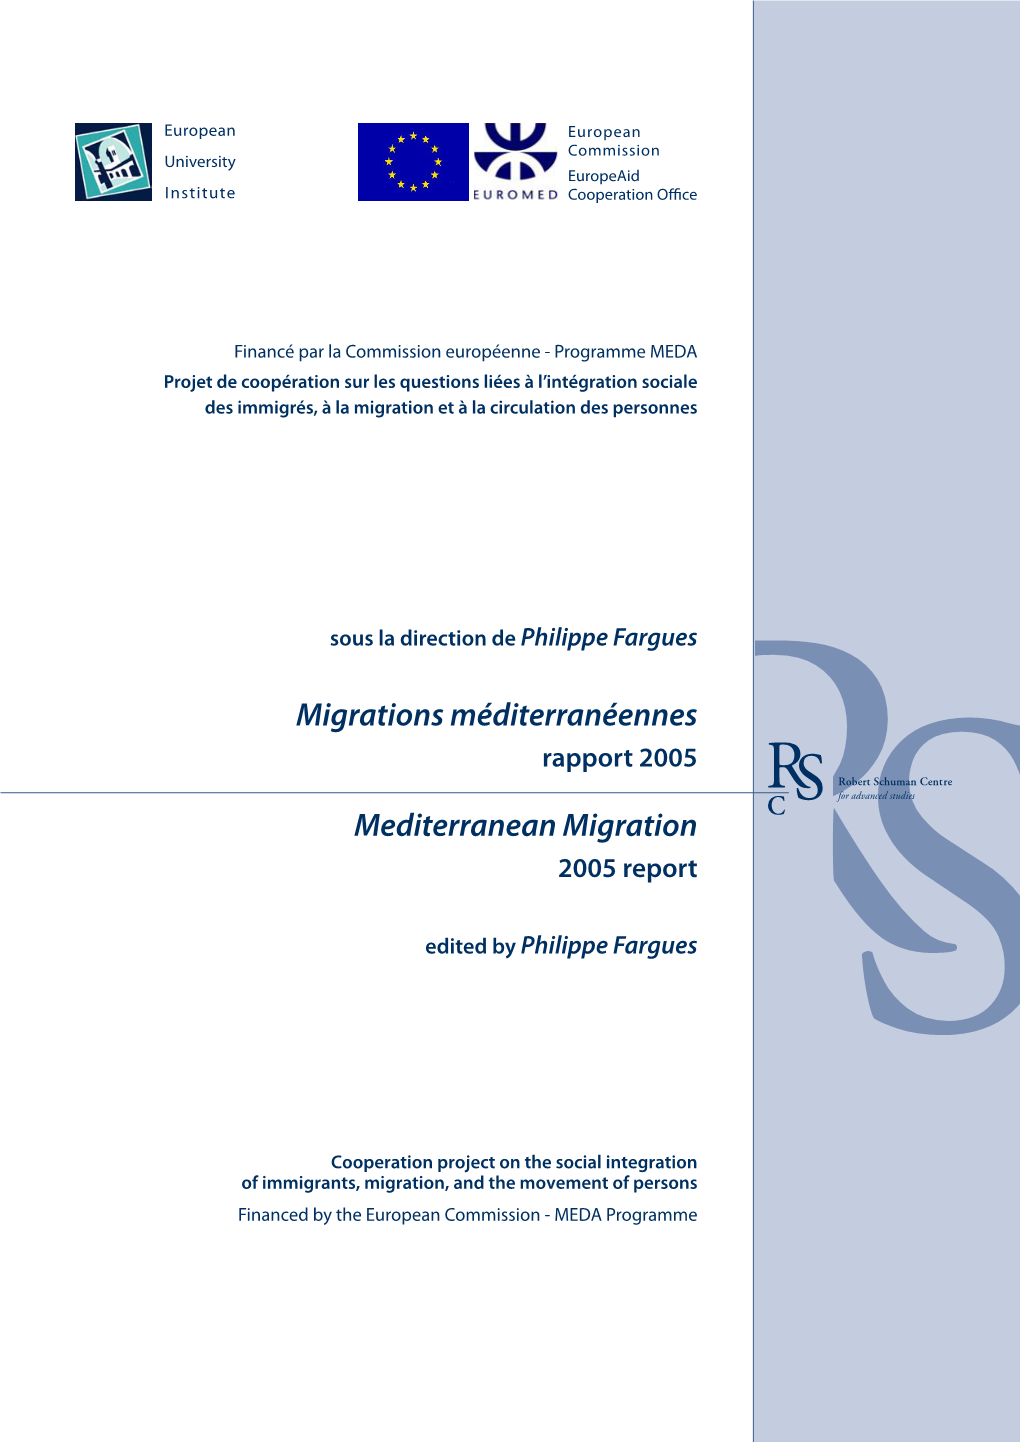 Migrations Méditerranéennes Mediterranean Migration